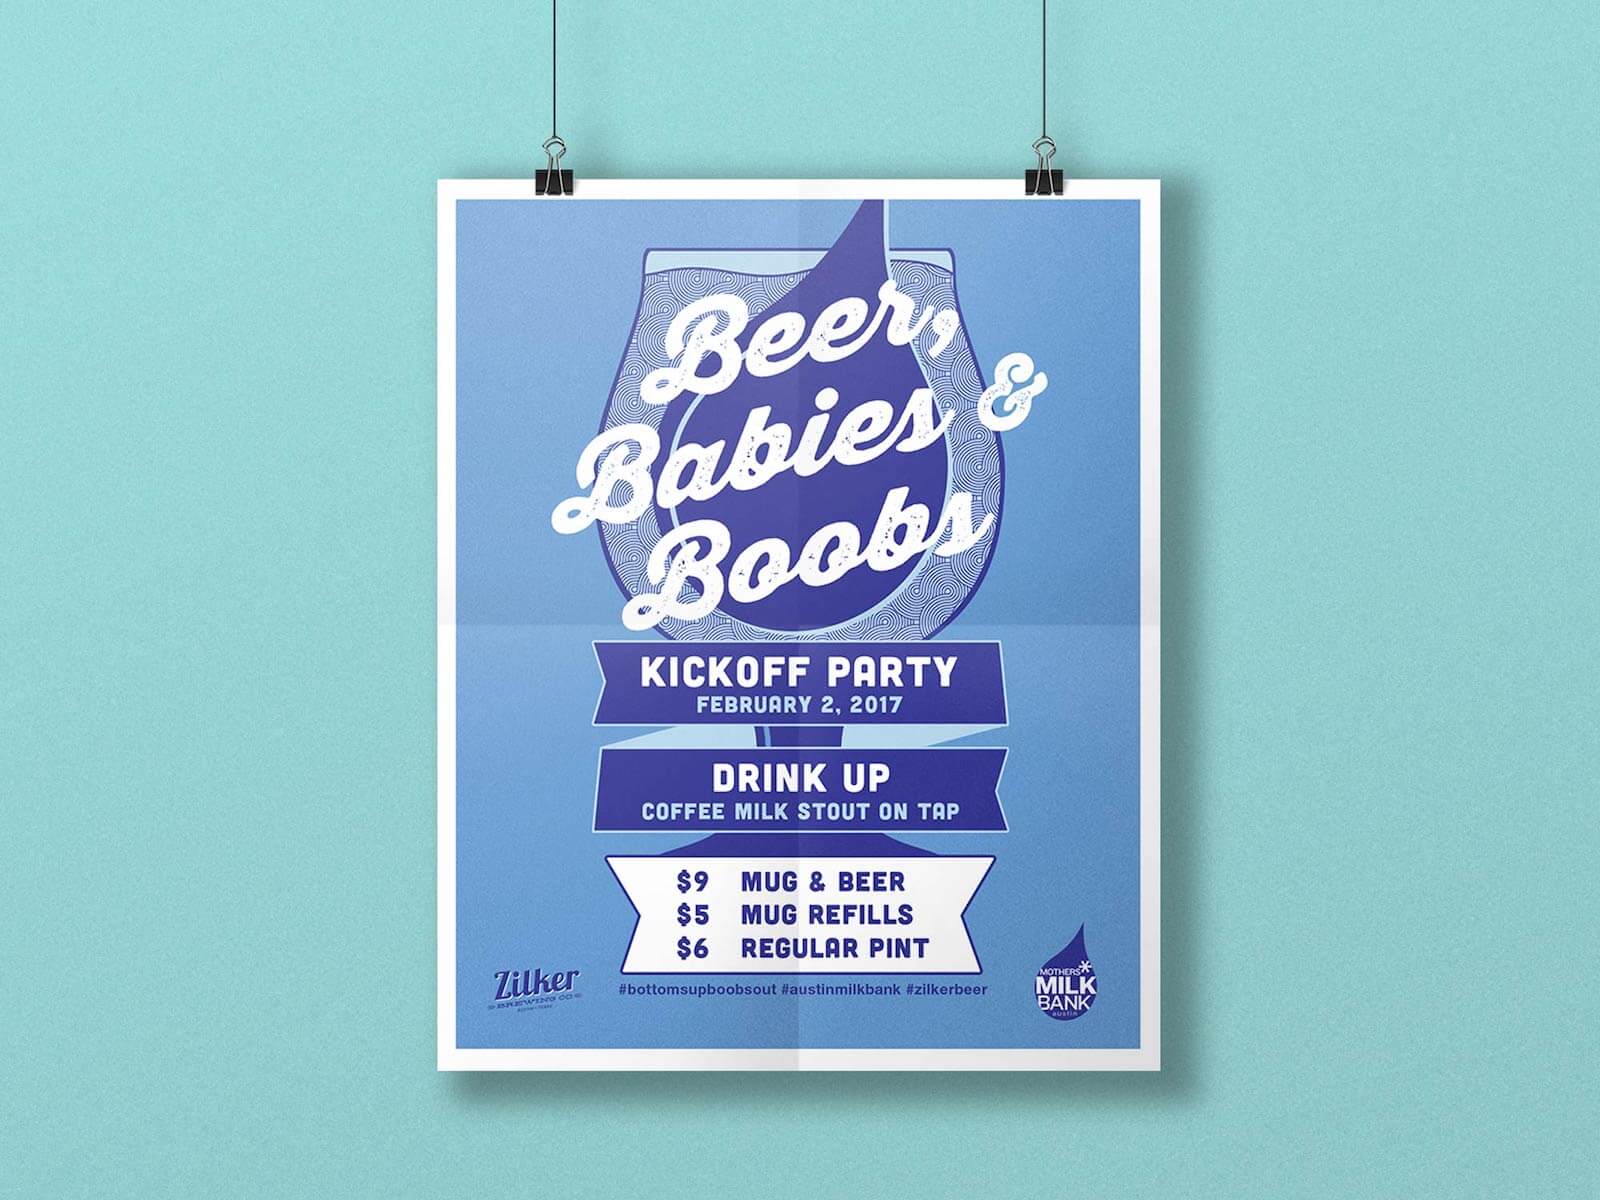 Mothers Milk Bank flyer design